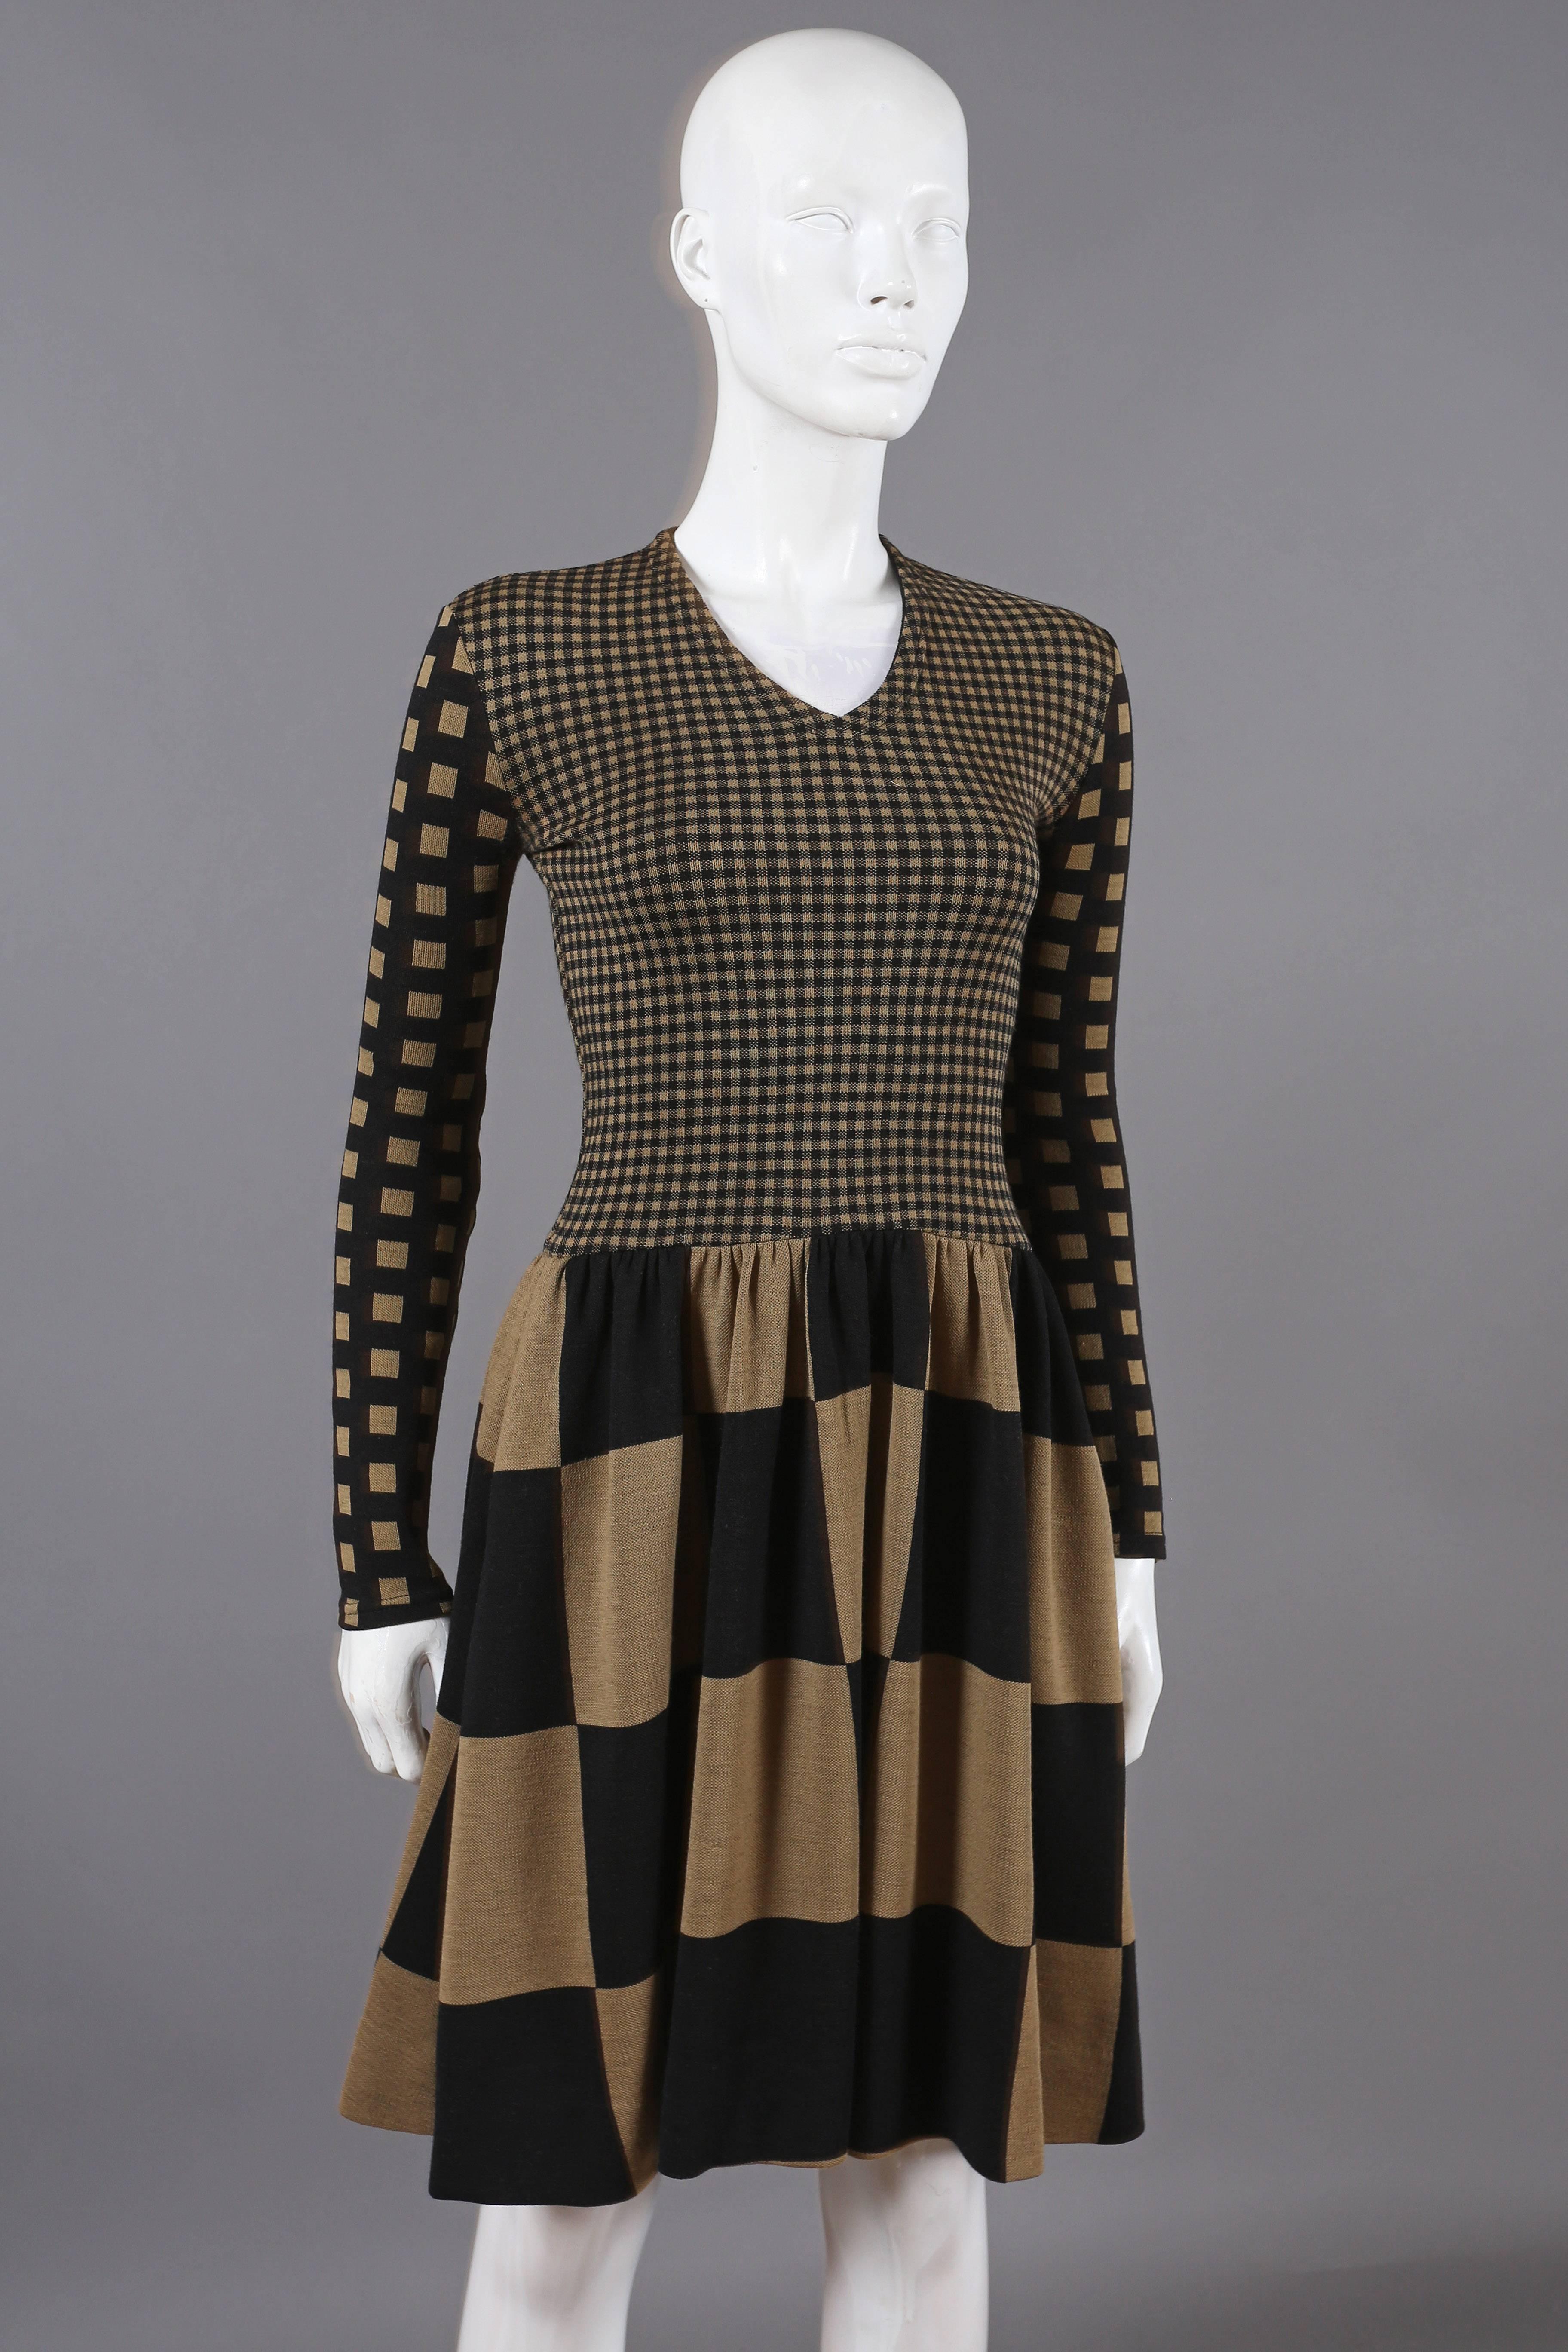 Women's Rudi Gernreich chessboard knitted dress, C. 1971